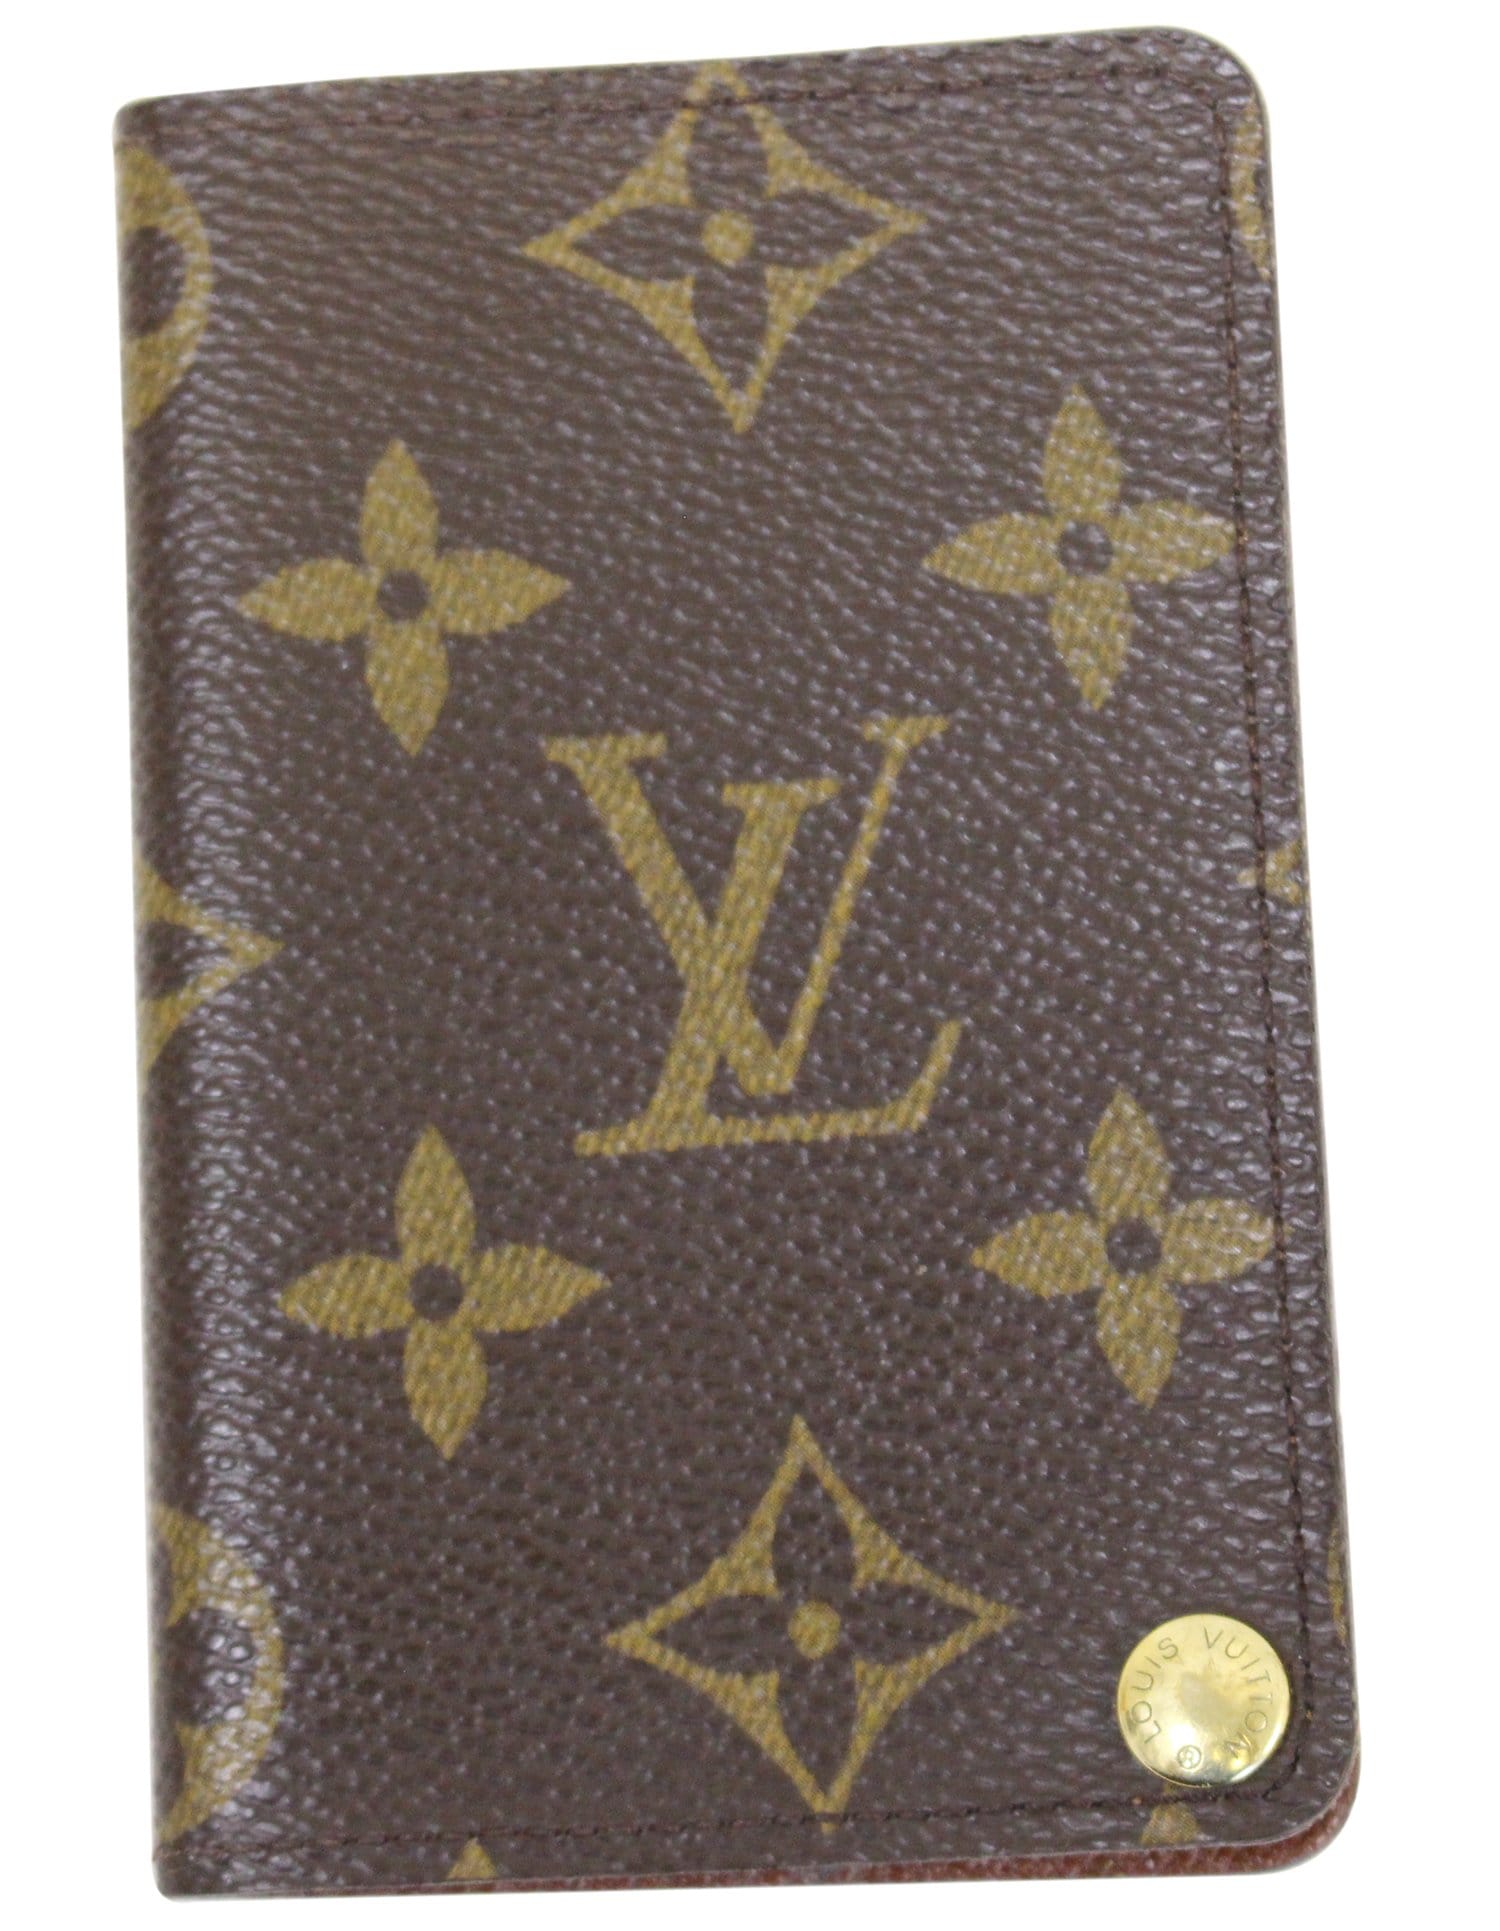 Shop Louis Vuitton MONOGRAM Card holder (N61722) by OceanPalace